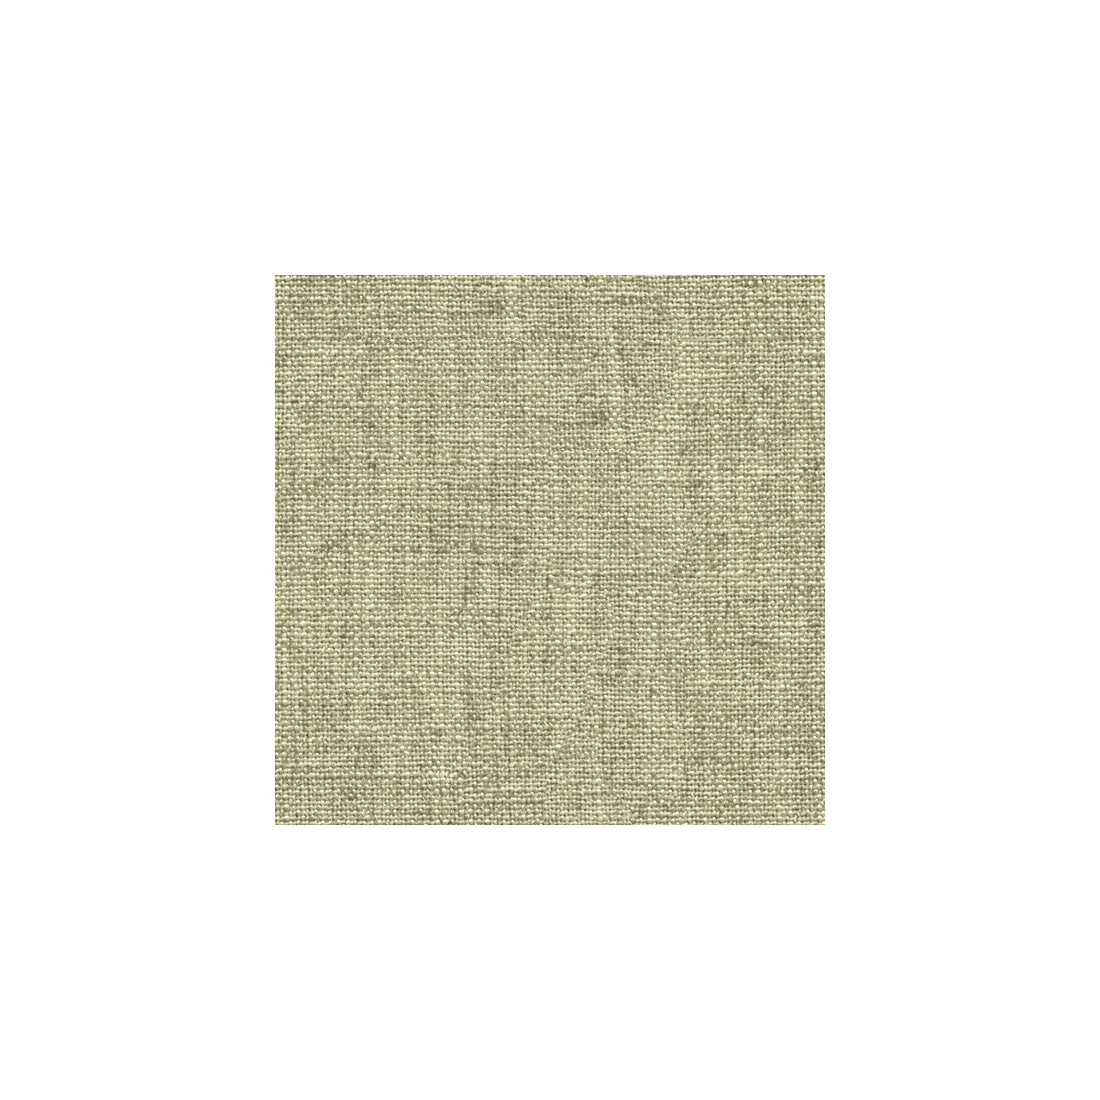 Kravet Smart fabric in 33140-106 color - pattern 33140.106.0 - by Kravet Smart in the Sarah Richardson Affinity collection